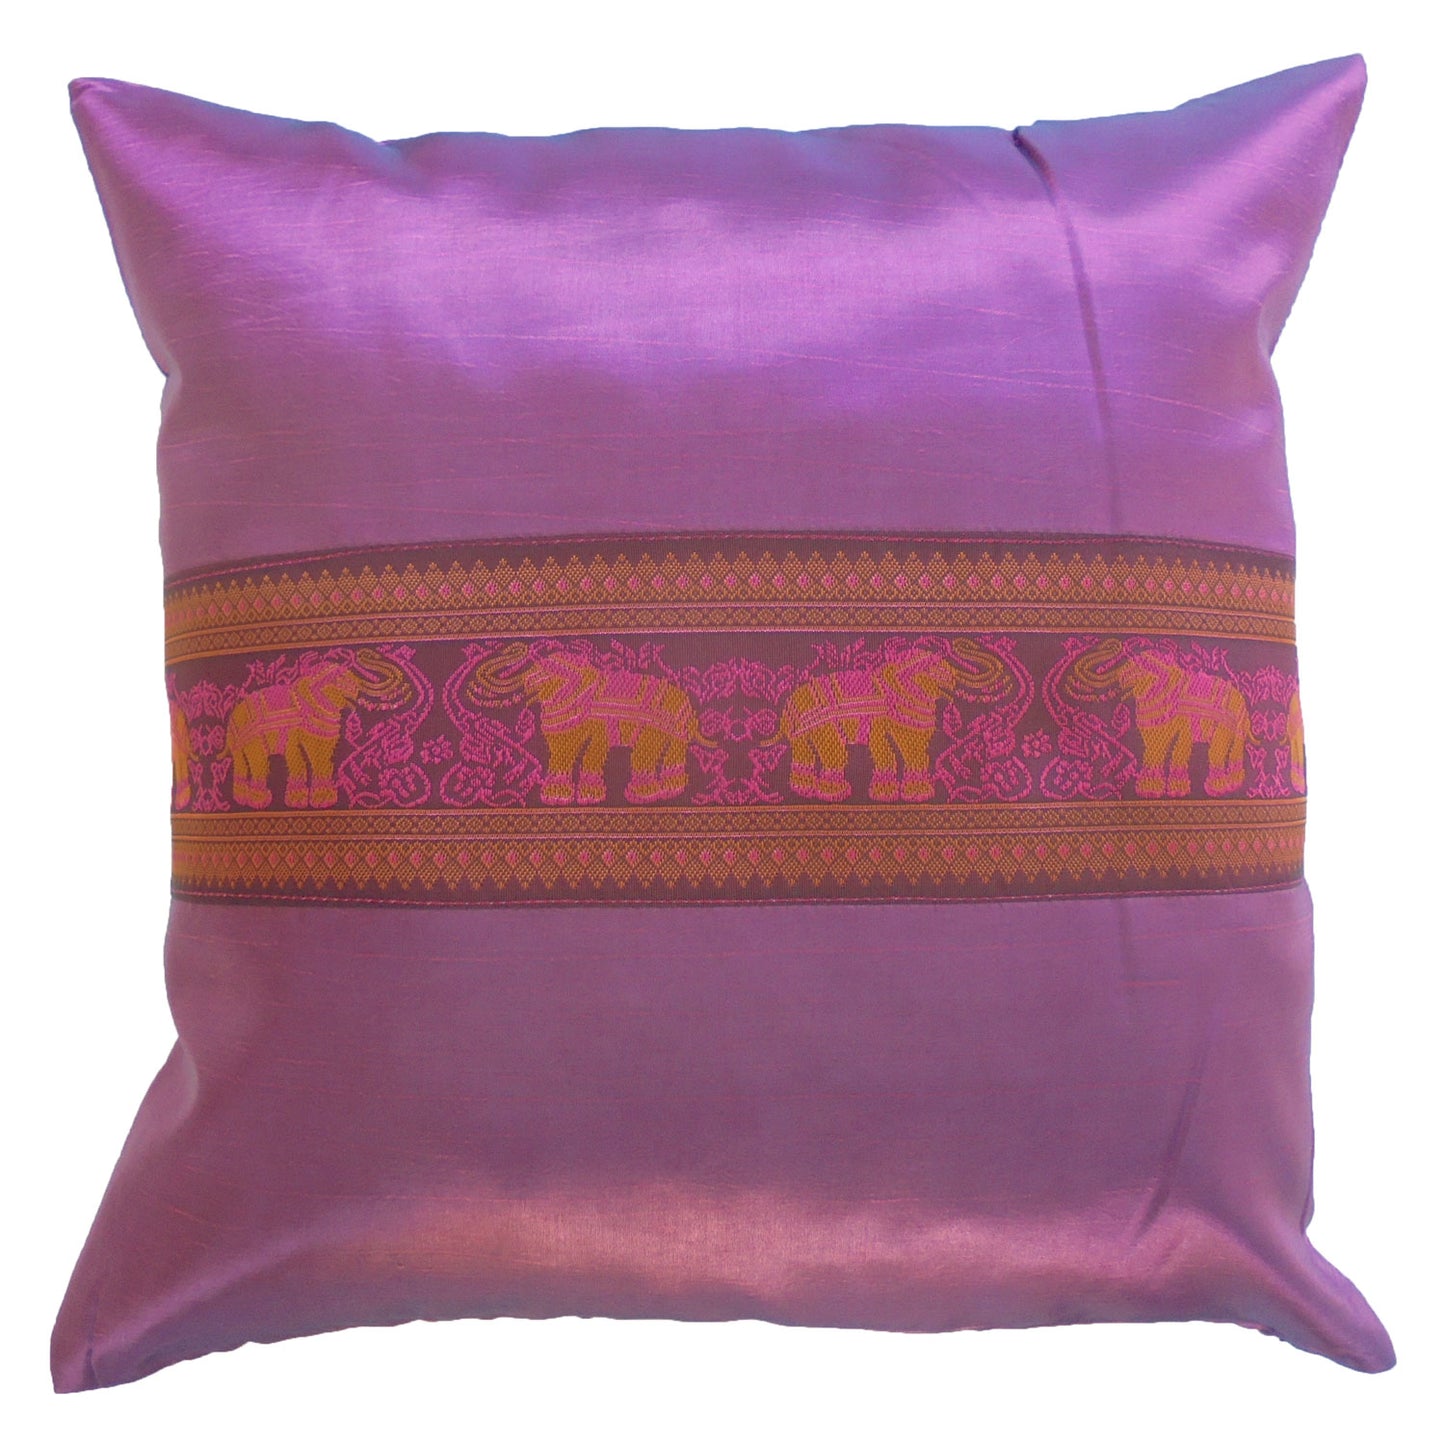 Pillow cushion cover motif elephants colorful different colors 40x40cm Thai silk sofa bed garden chair